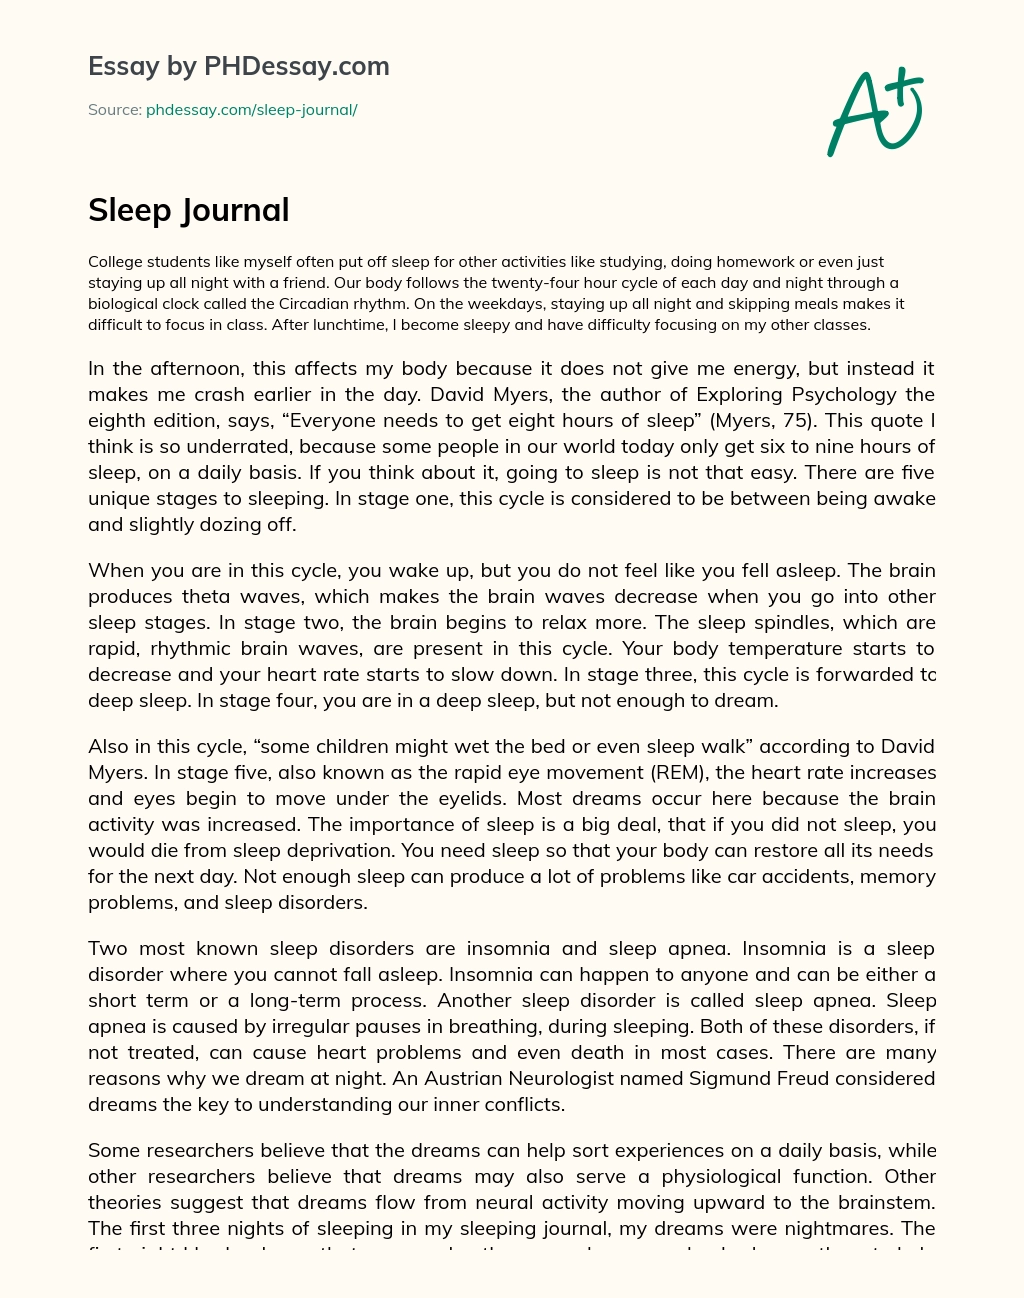 Sleep Journal essay